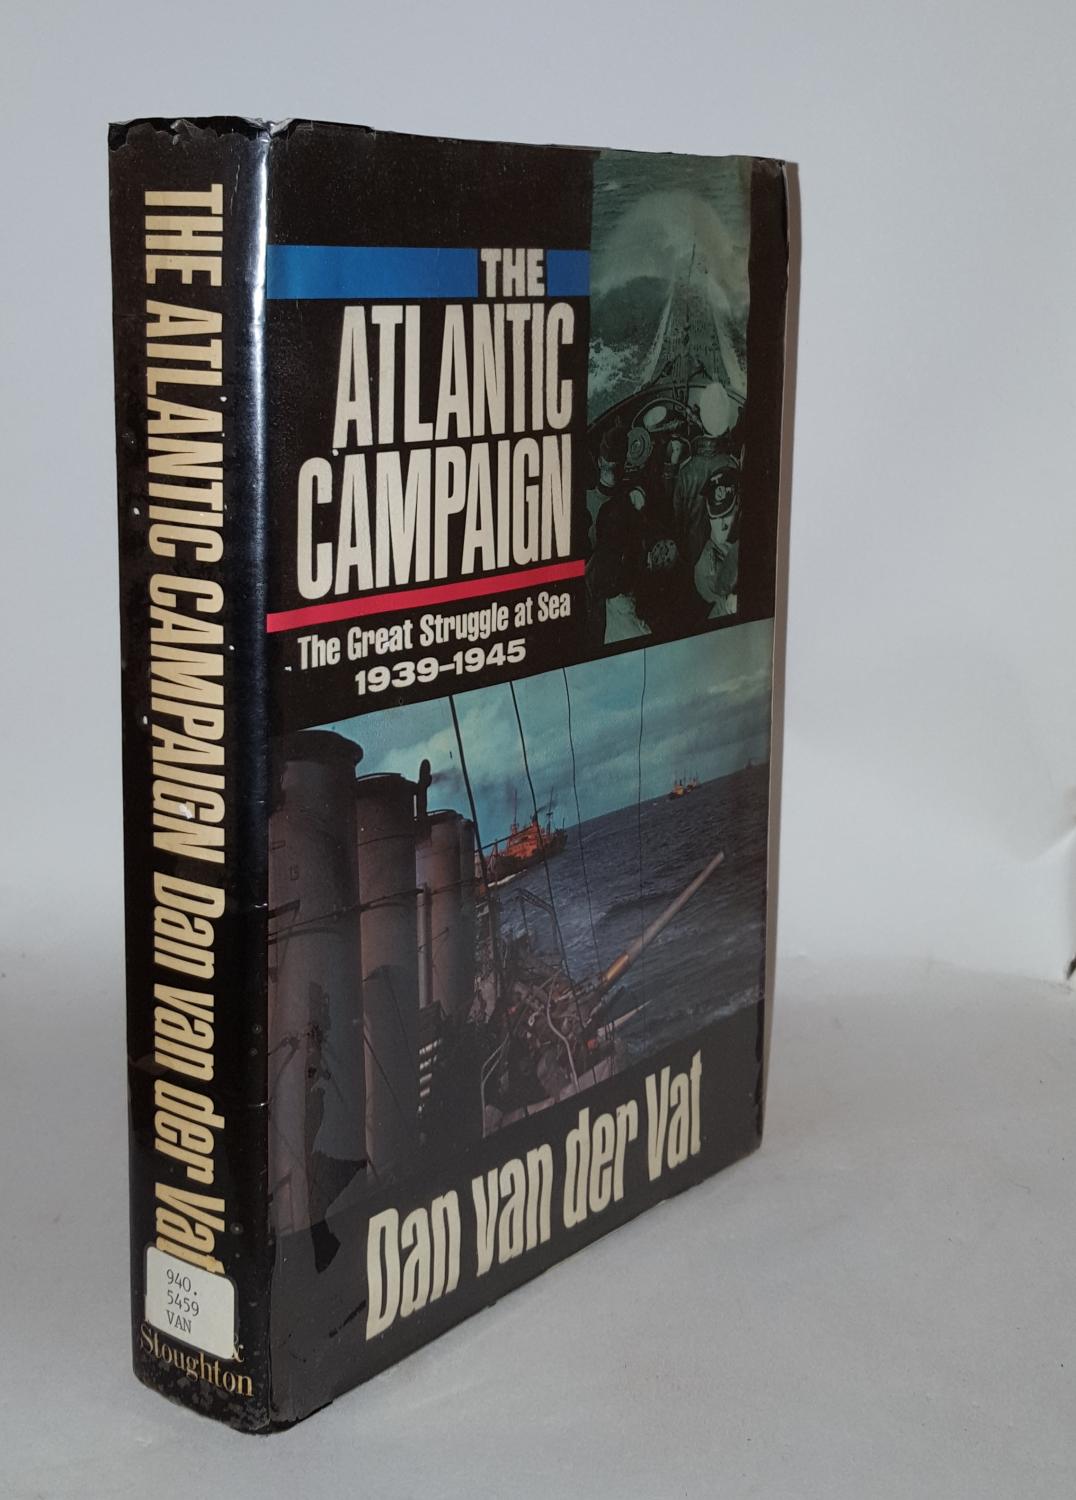 THE ATLANTIC CAMPAIGN The Great Struggle at Sea 1939-45 - VAN DER VAT Dan